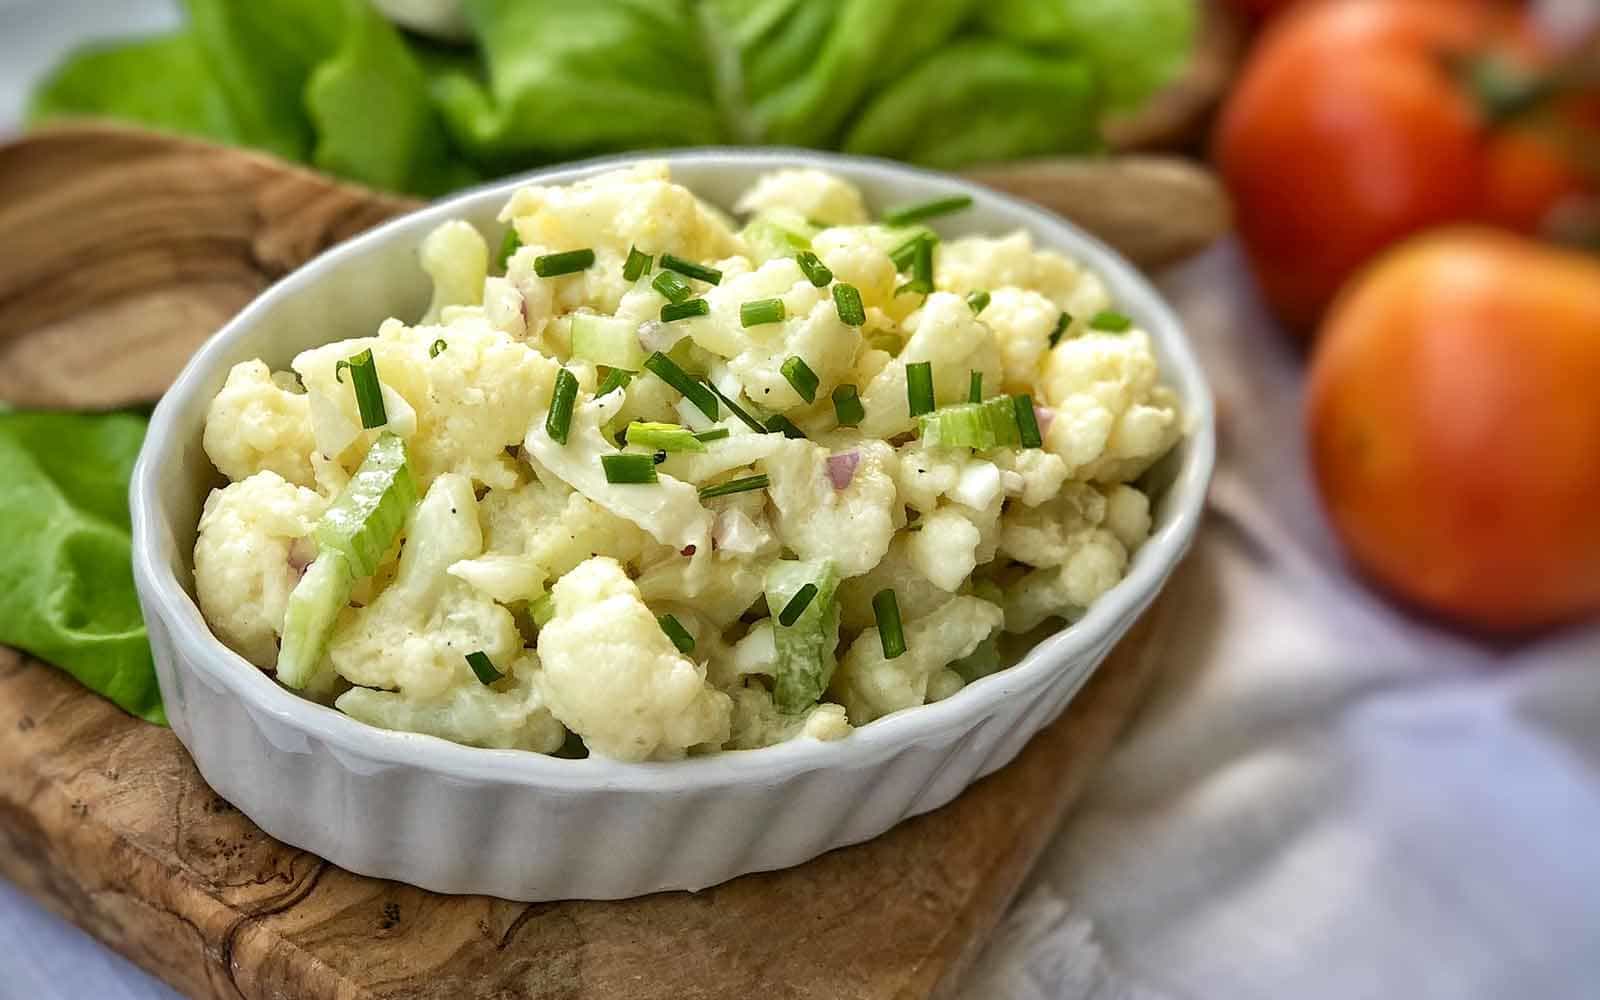 Homemade Cauliflower 'Fauxtato' Salad: Hearty & Healthy! - Nutracelle